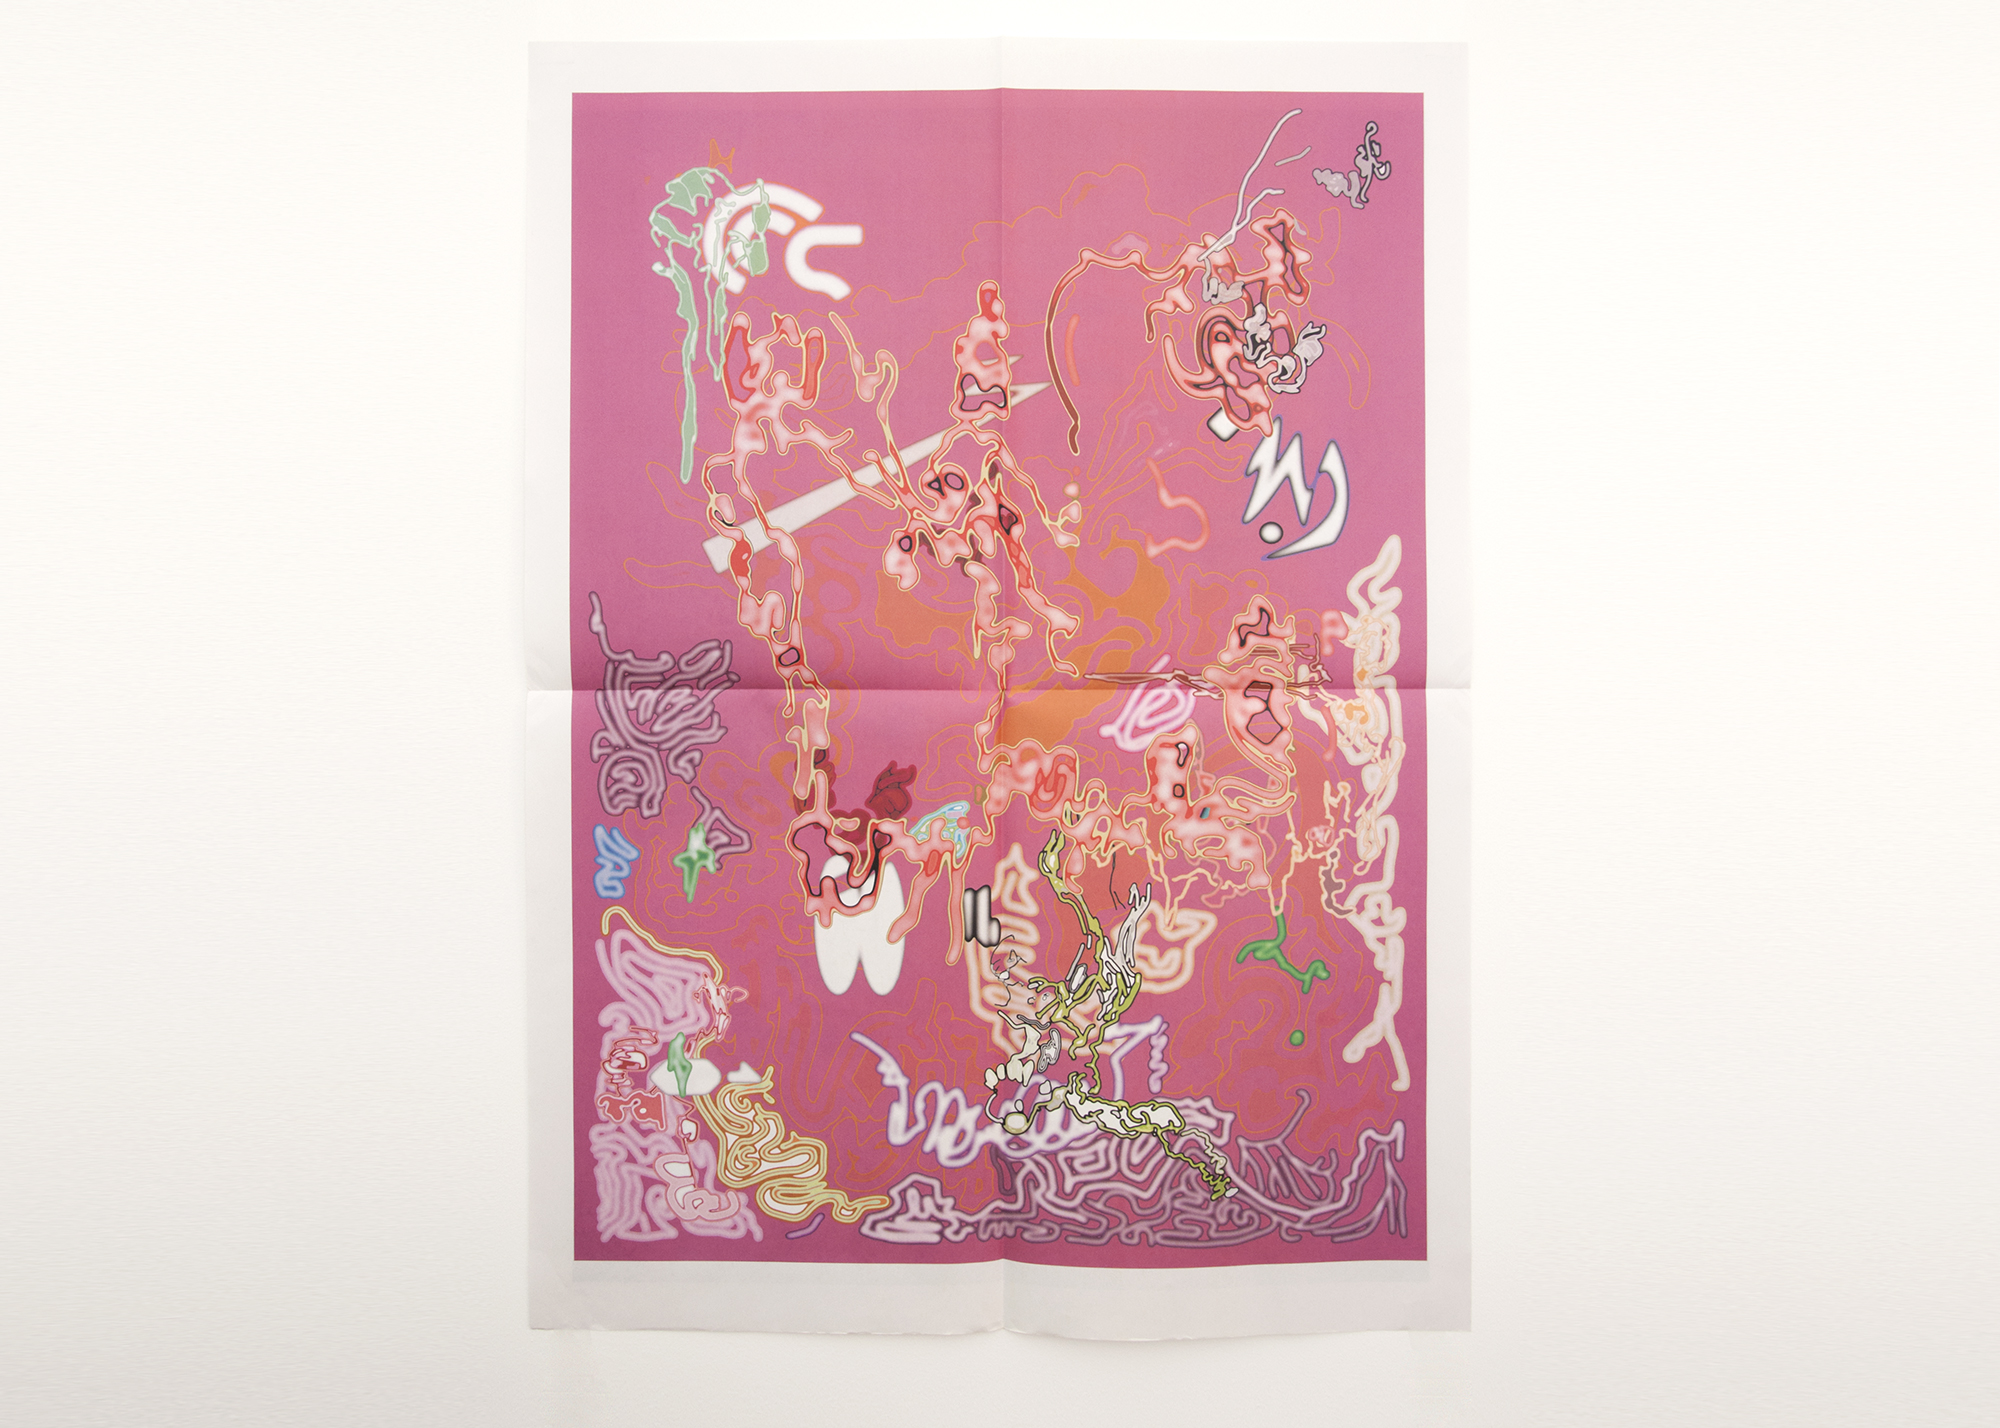 confetti broadsheet digital zine abstract artist book